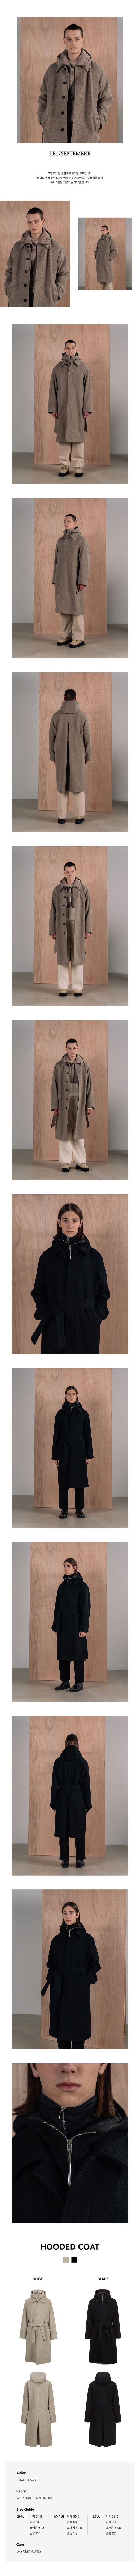 LE17SEPTEMBRE Black Hooded Coat